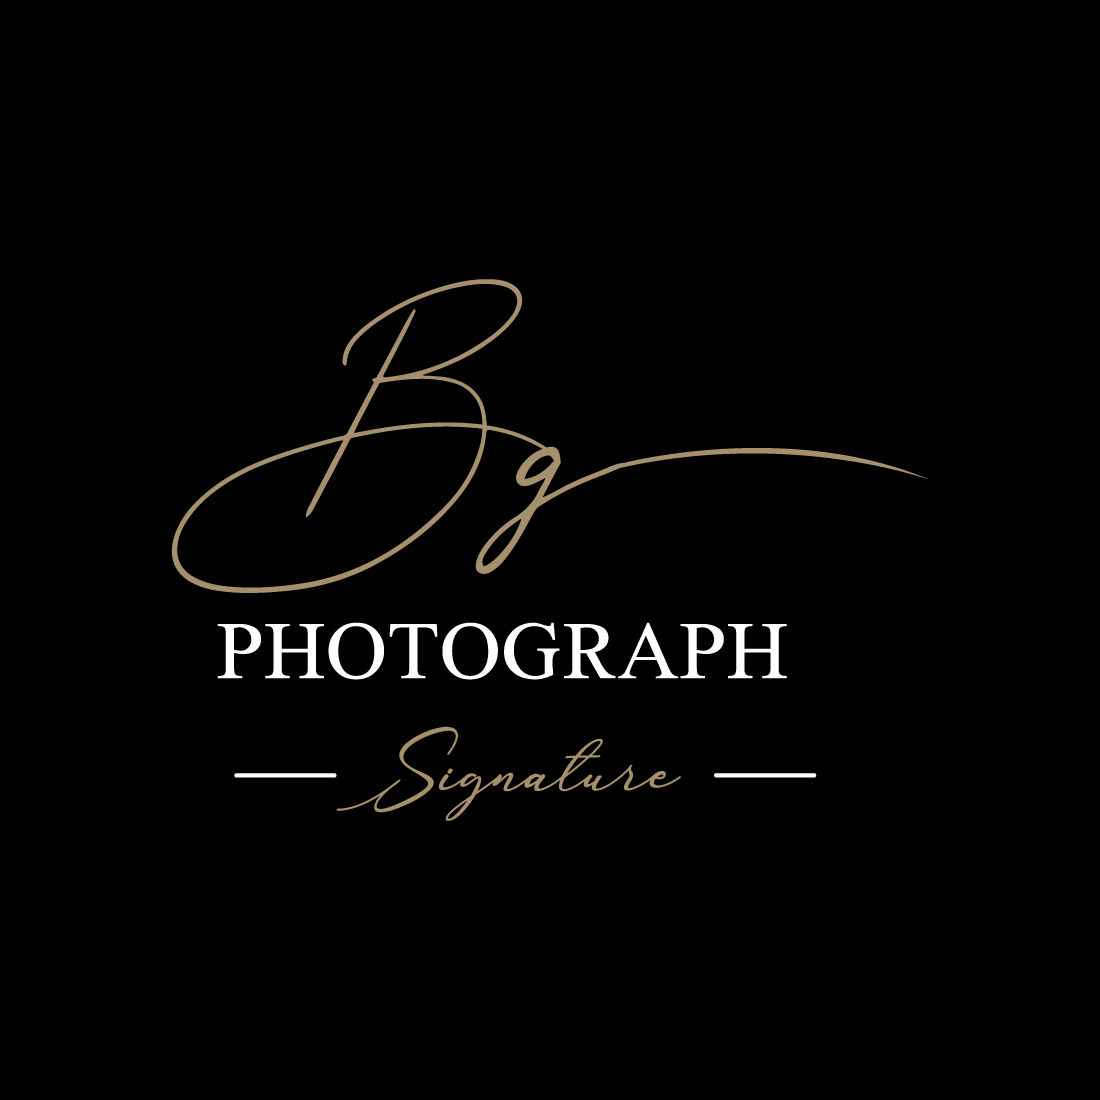 Initials BG photograph Signature logo design BG Signature letters logo best vector template arts preview image.